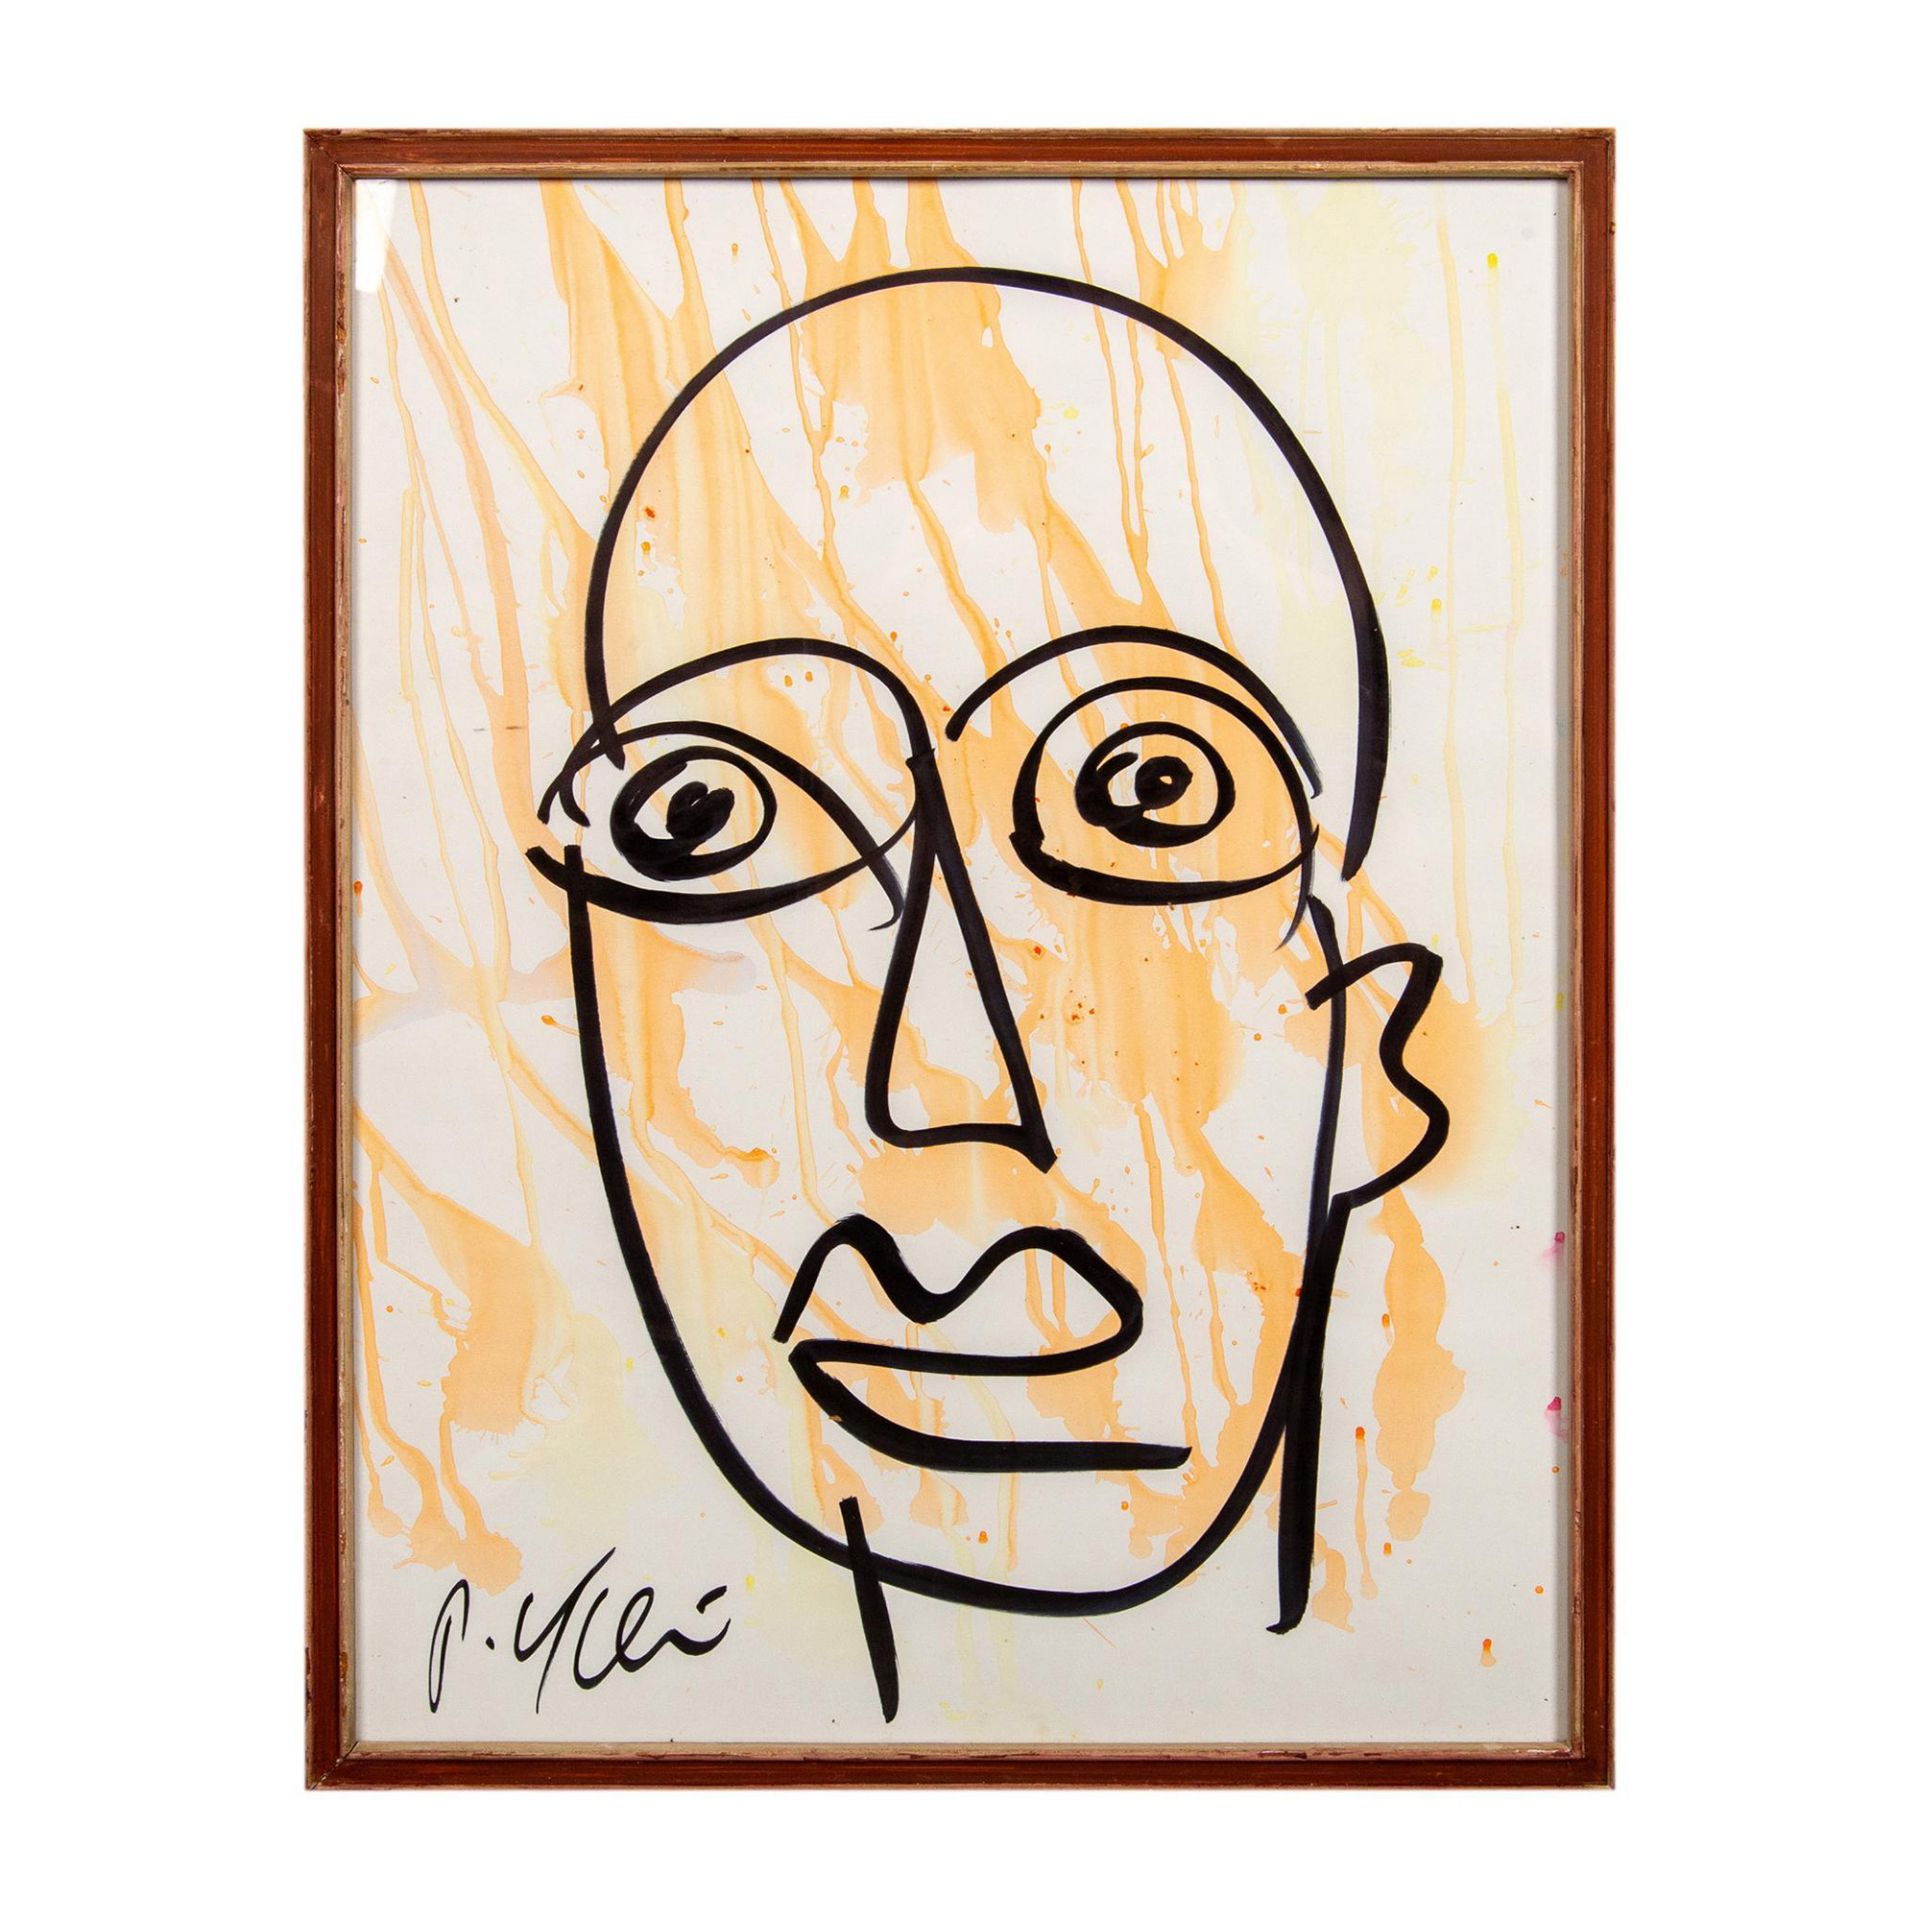 Peter Keil, Original Painting on Board, Portrait, Signed